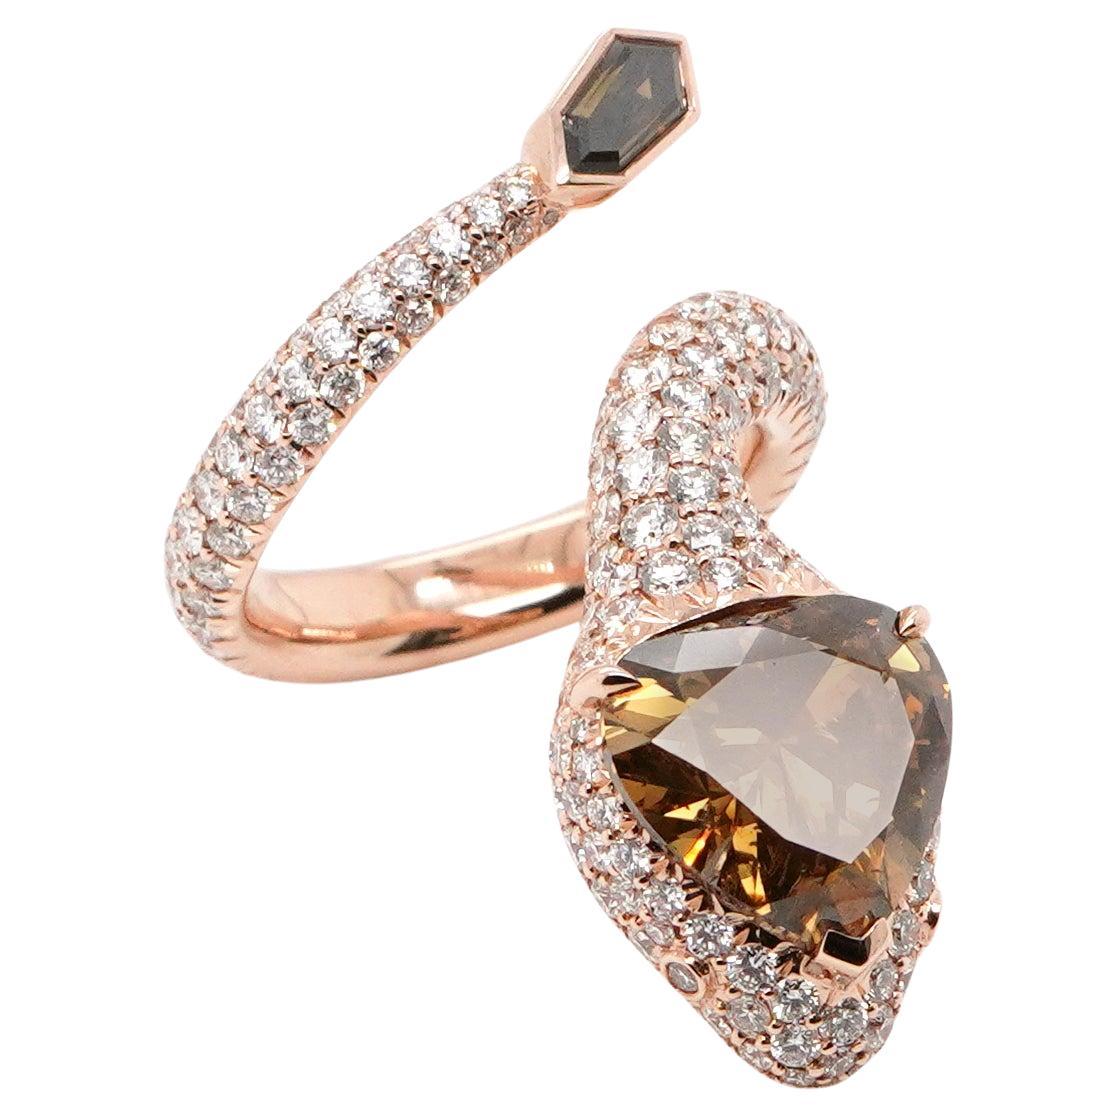 BENJAMIN FINE JEWELRY 5.03 cts Heart Shape Brown Diamond 18K Ring For Sale